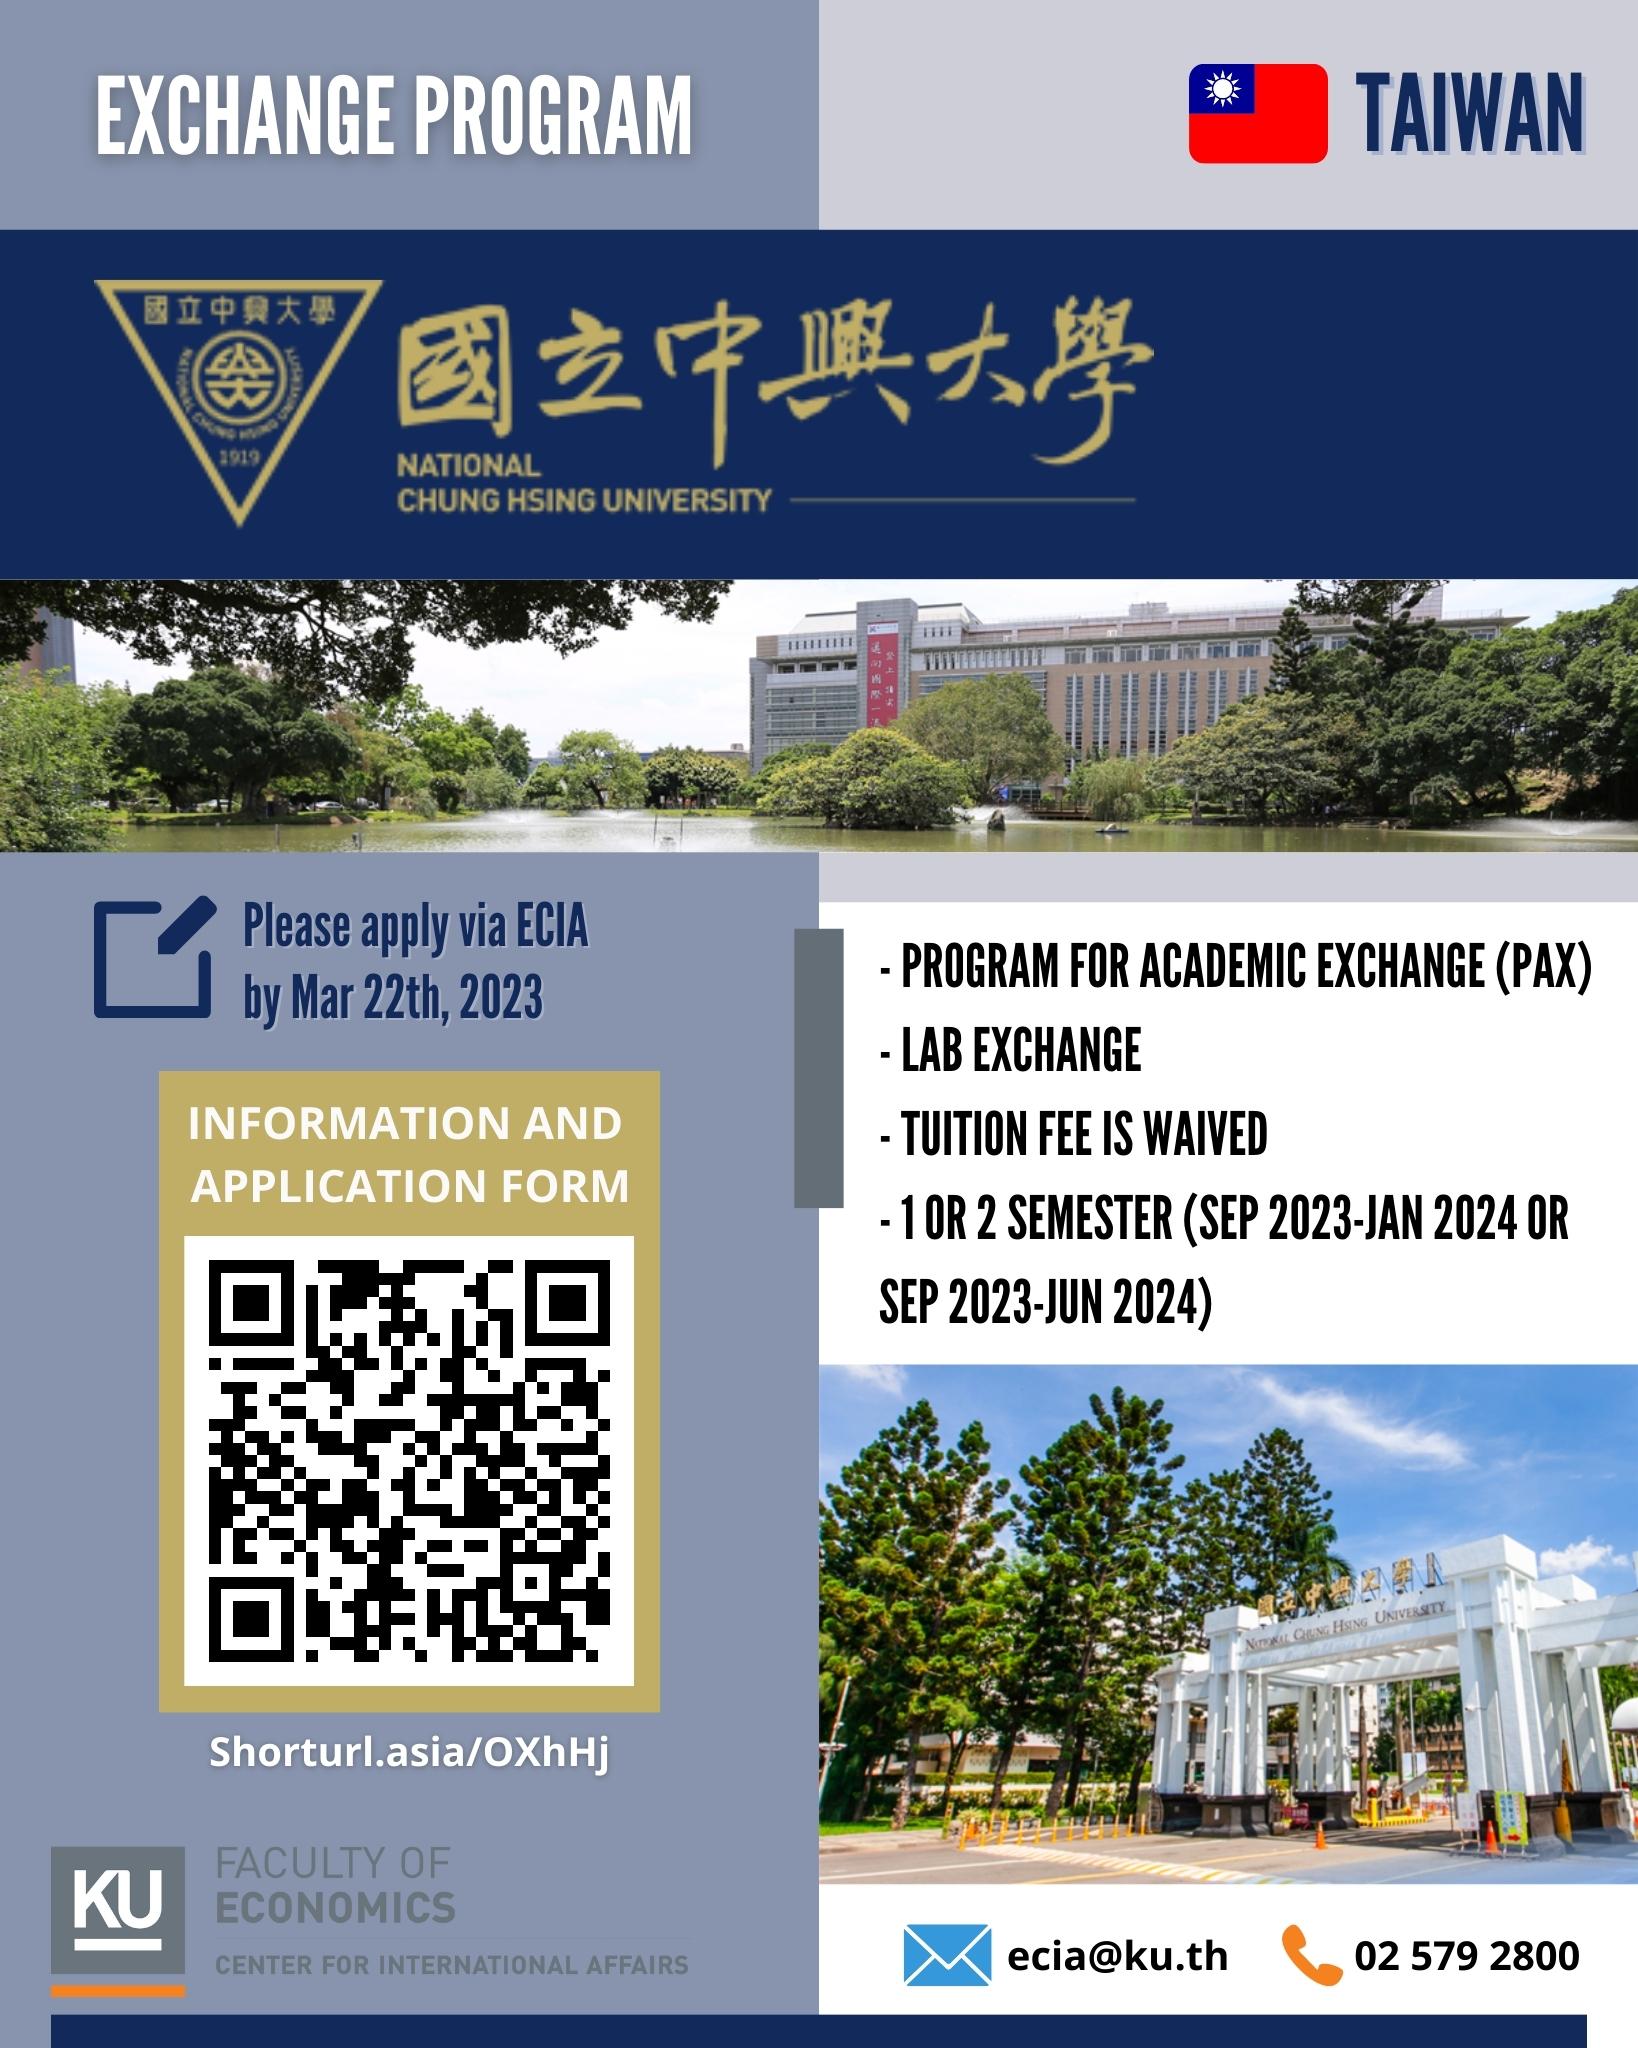 [Exchange Program] National Chung Hsing University, Taiwan